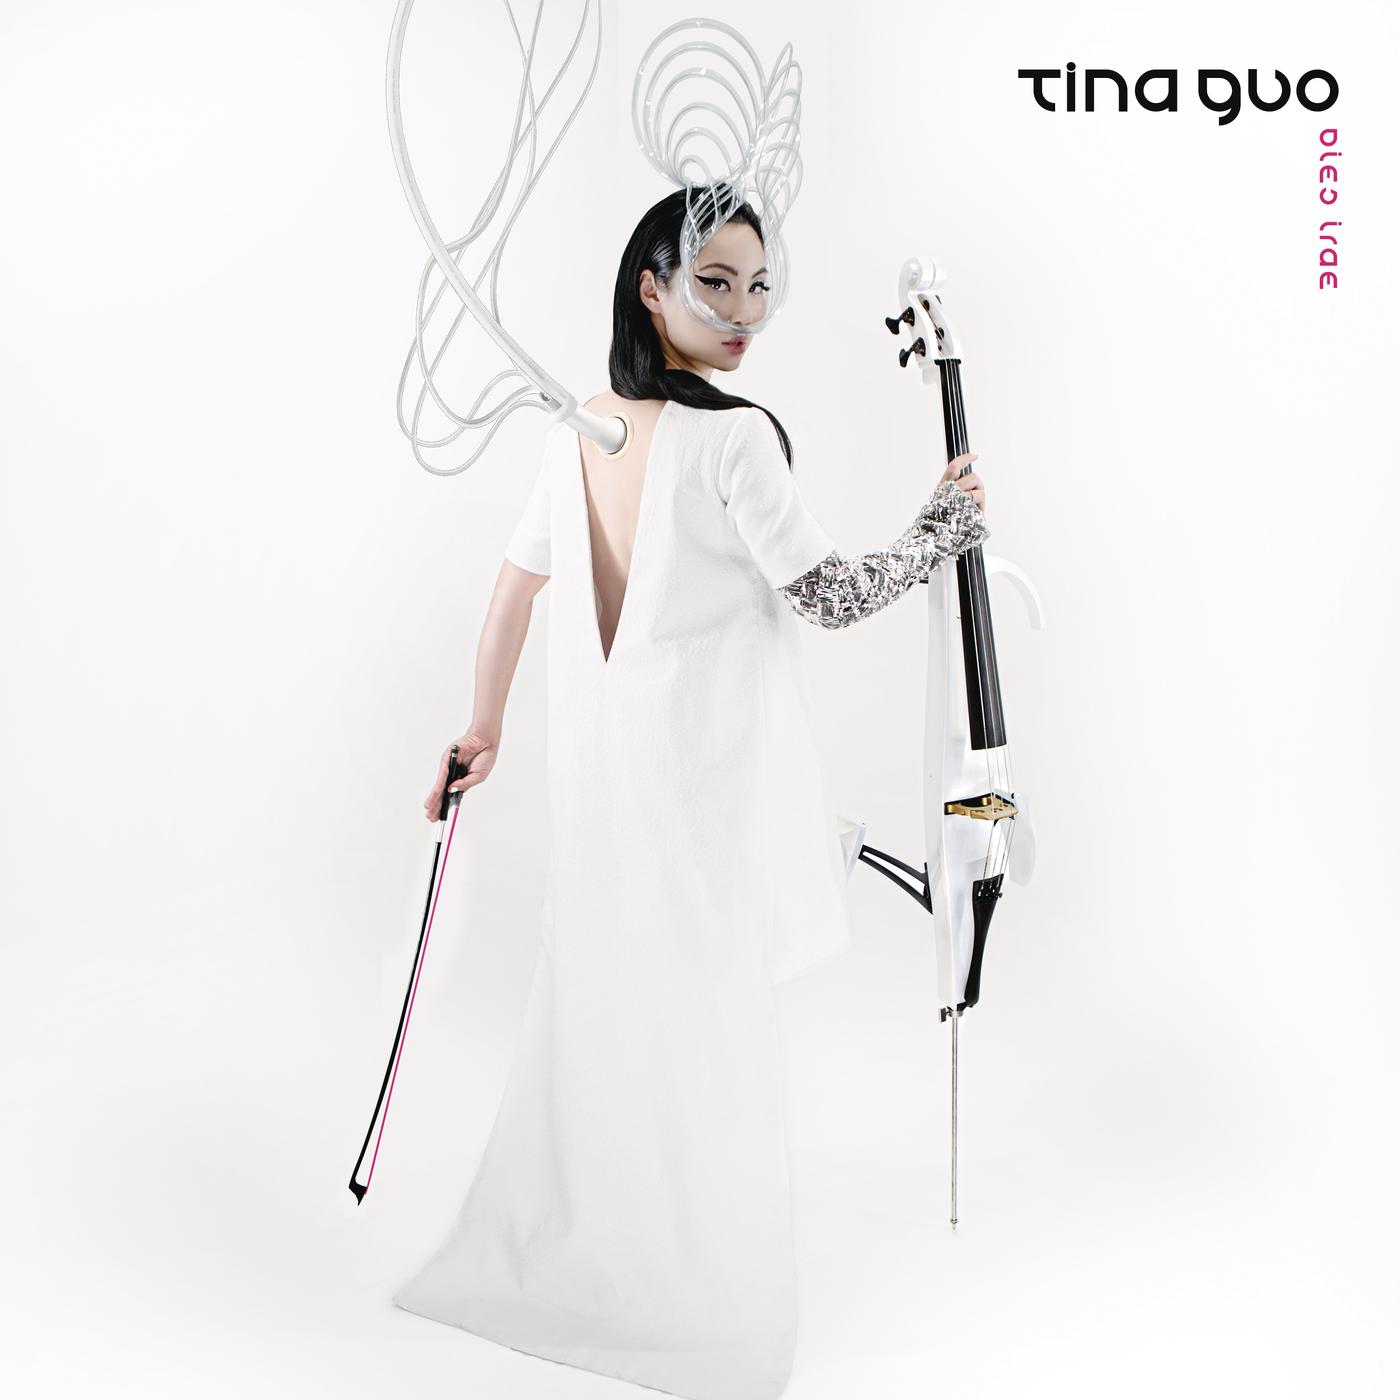 Tina Guo - Adagio for Strings and Organ